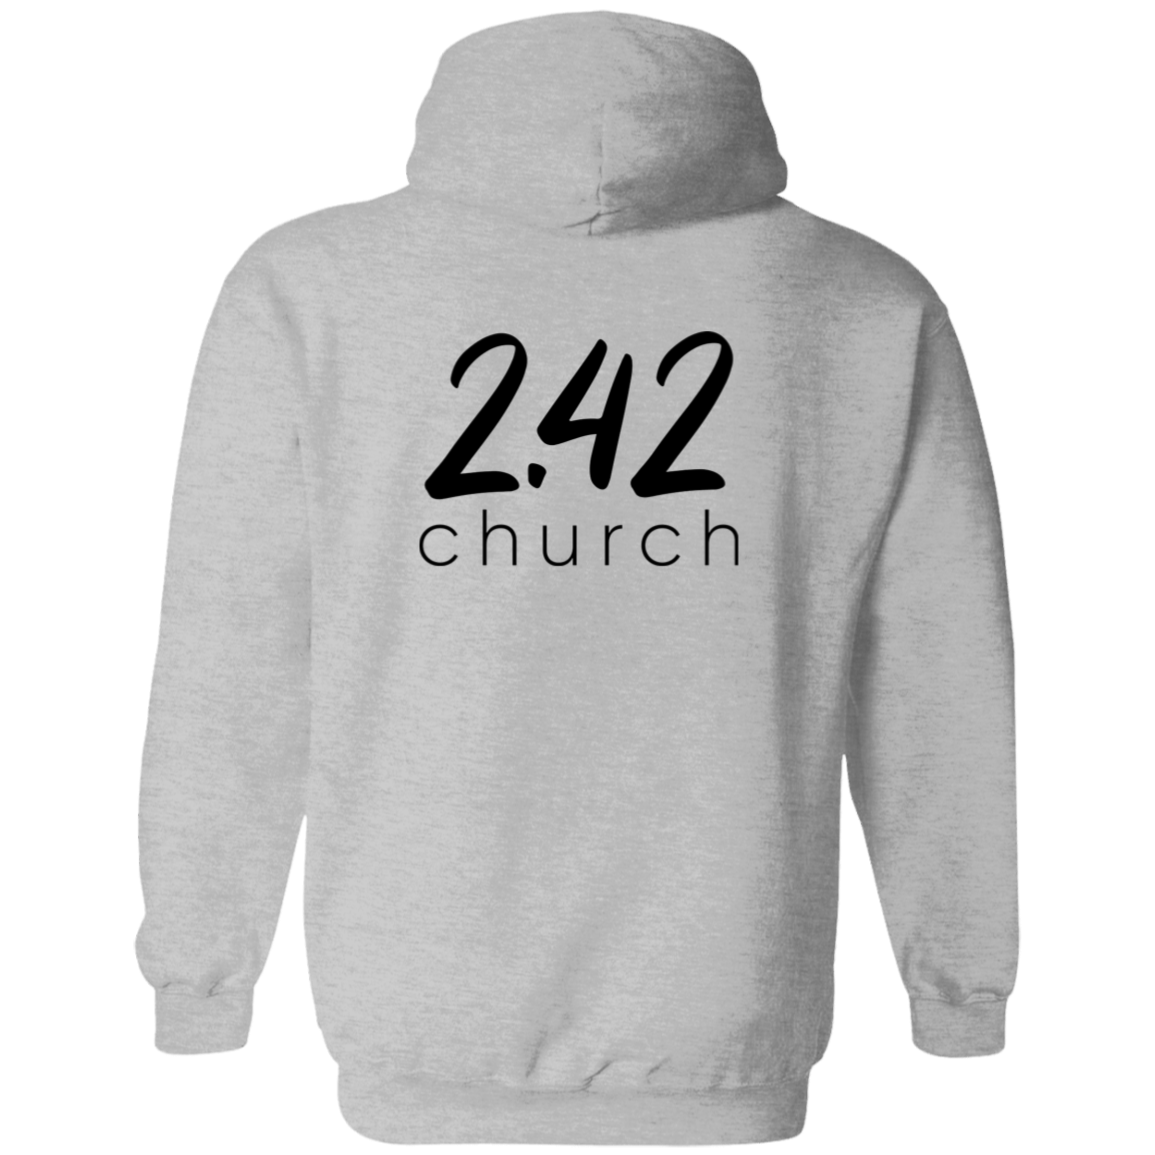 2.42 Church Hoodies - Black Logo